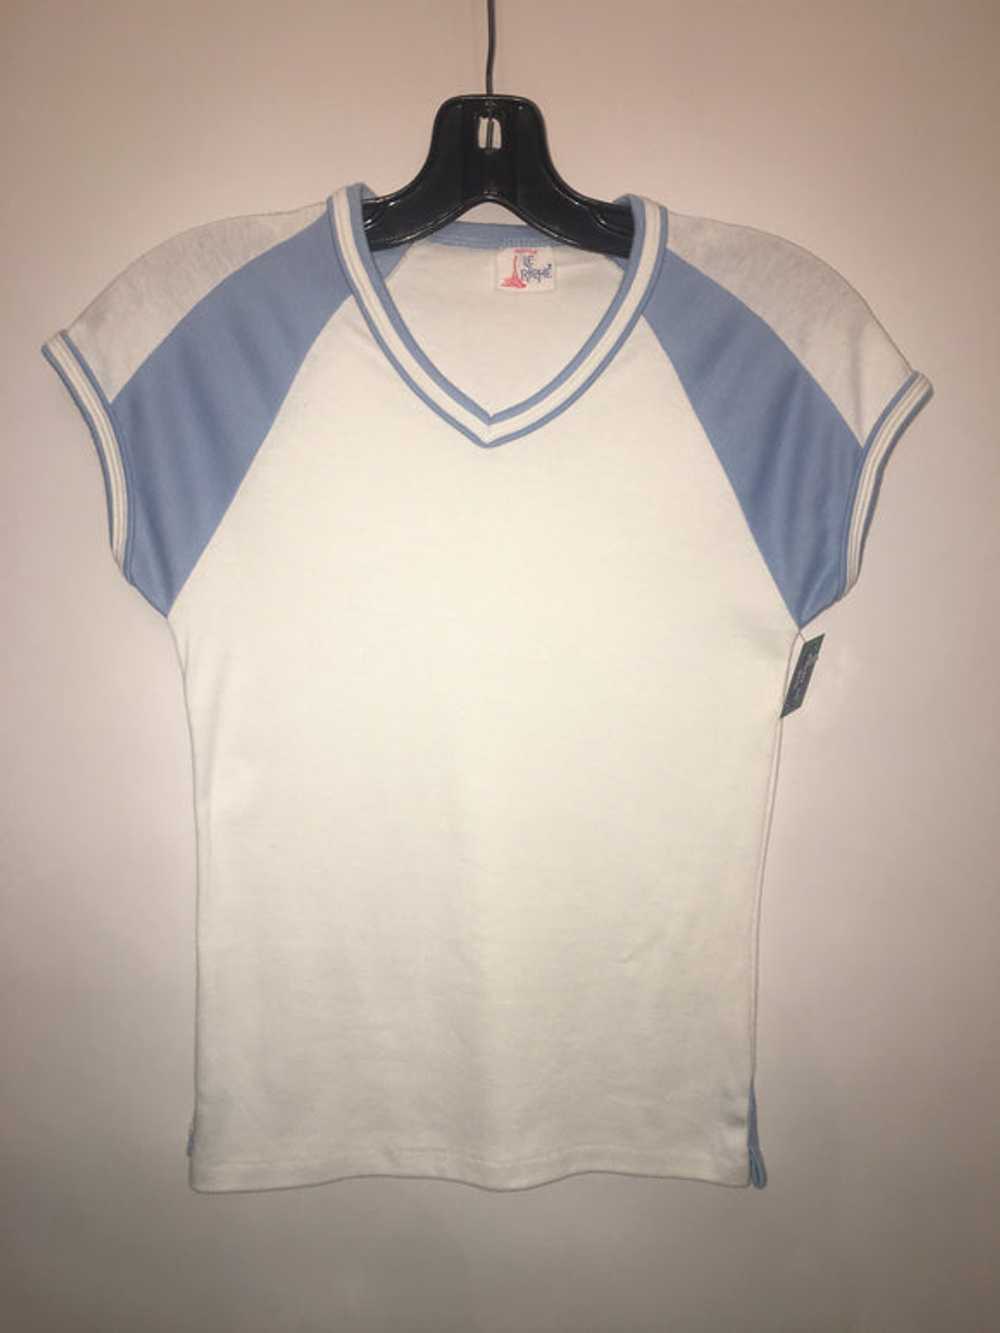 70s T shirt - image 1